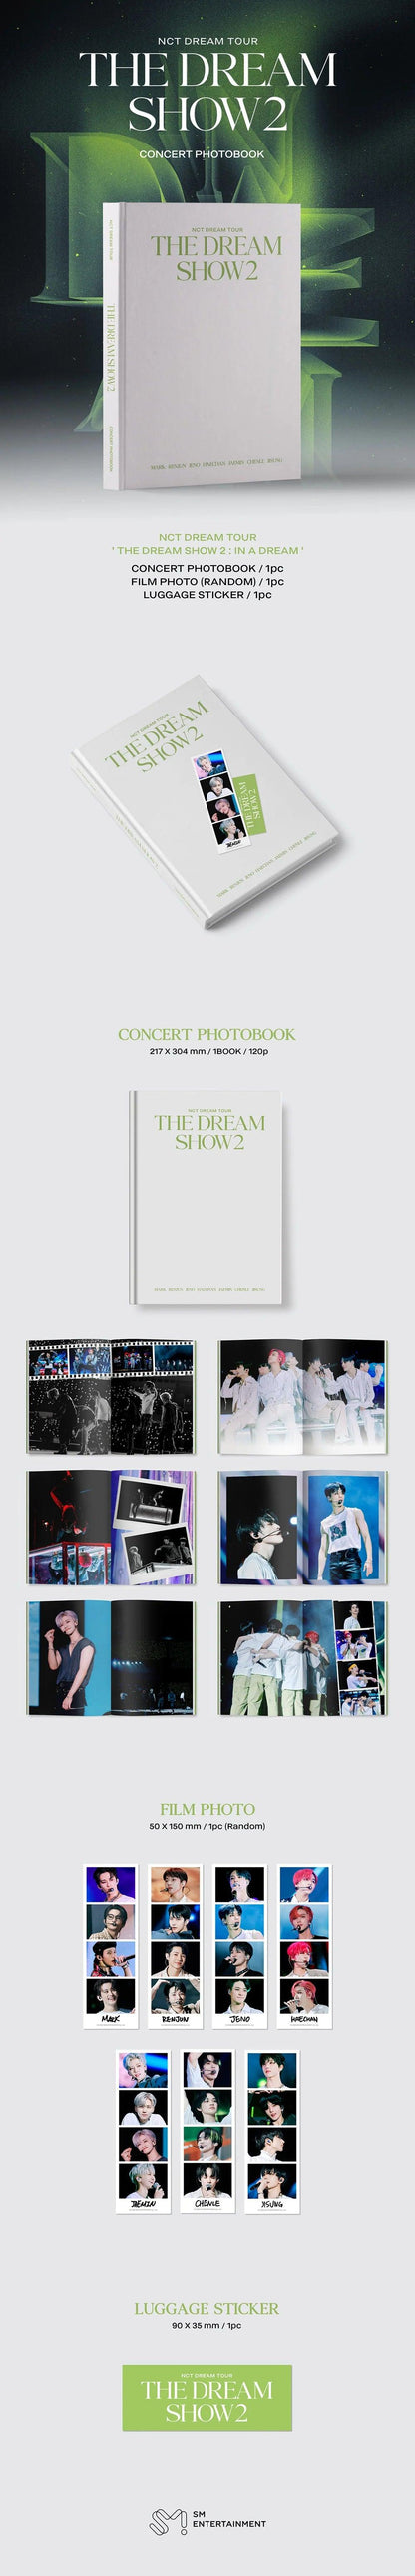 [PRE ORDER] NCT DREAM - THE DREAM SHOW 2 Concert Photobook - KAEPJJANG SHOP (캡짱 숍)